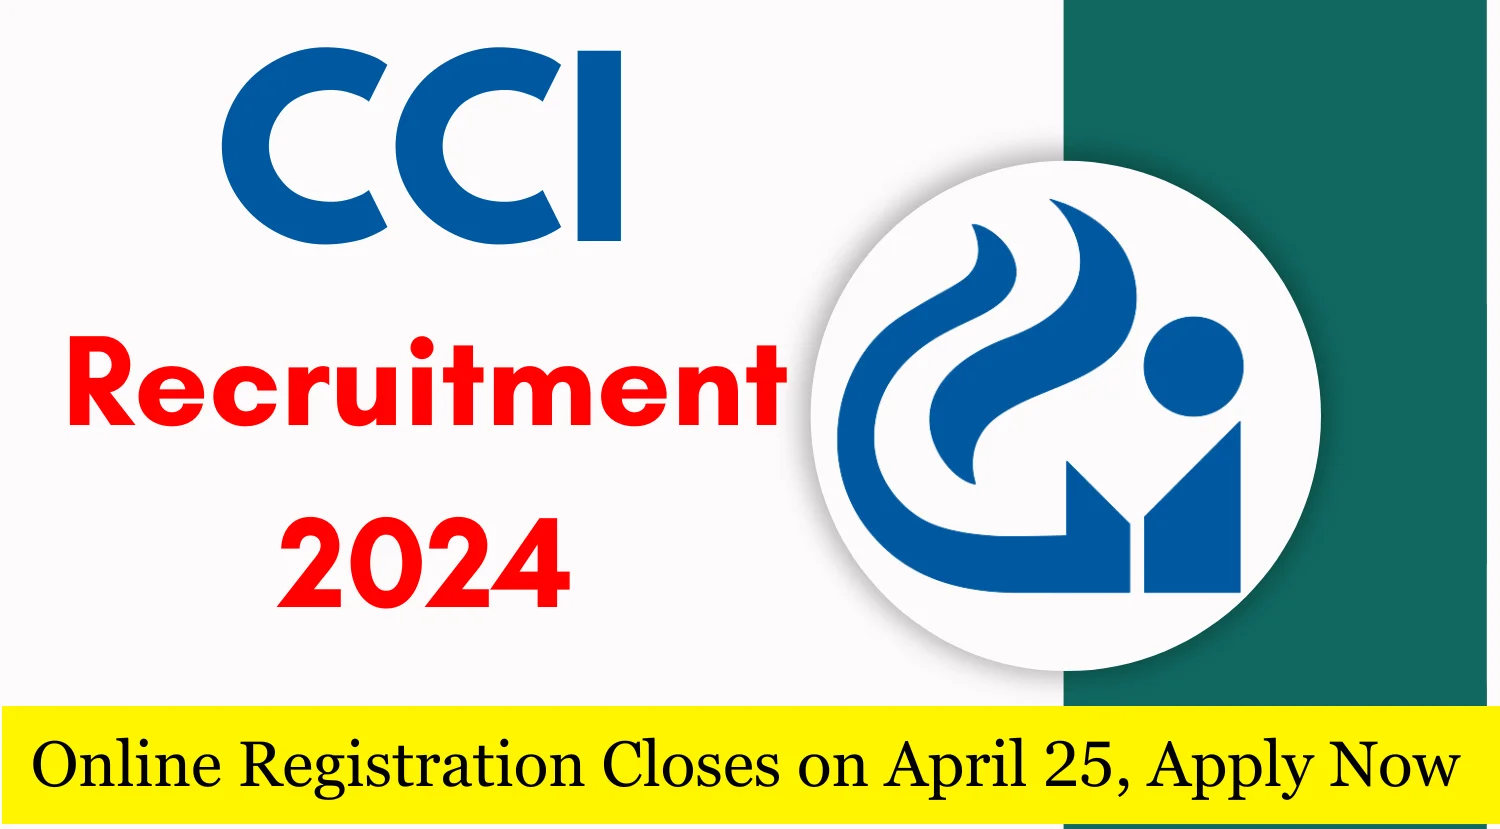 CCI Recruitment 2024 Online Registration Closes on April 25 Apply Now